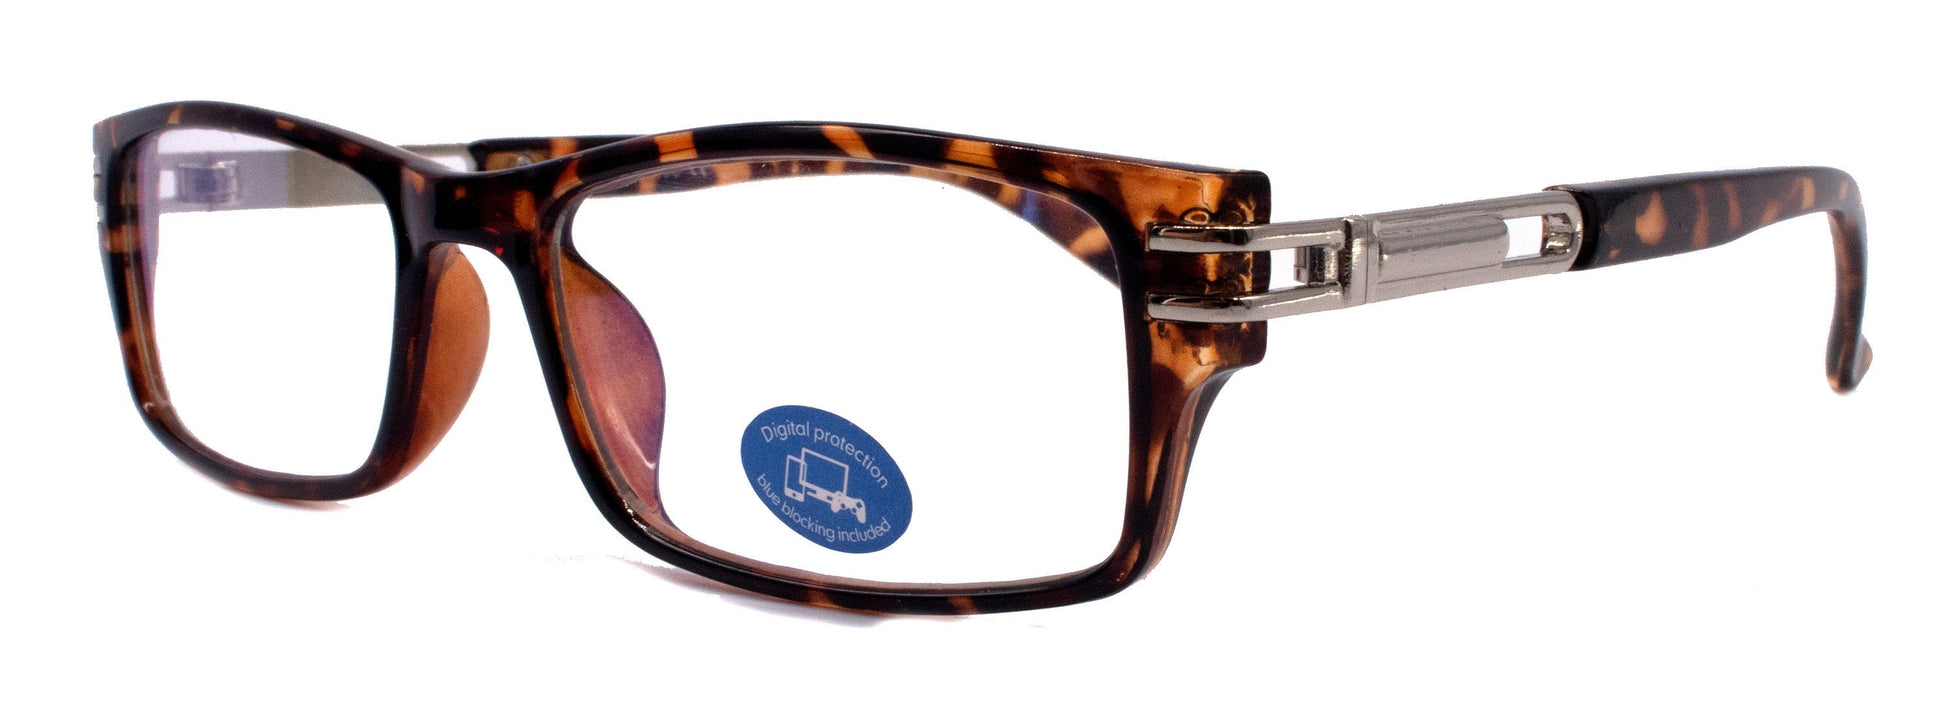 The Hudson, (Blue Light Glasses) Reading Glasses, No Magnification W/ A/R AntiGlare, Reduce Eyestrain (Brown Tortoise Shell) NY Fifth Avenue 